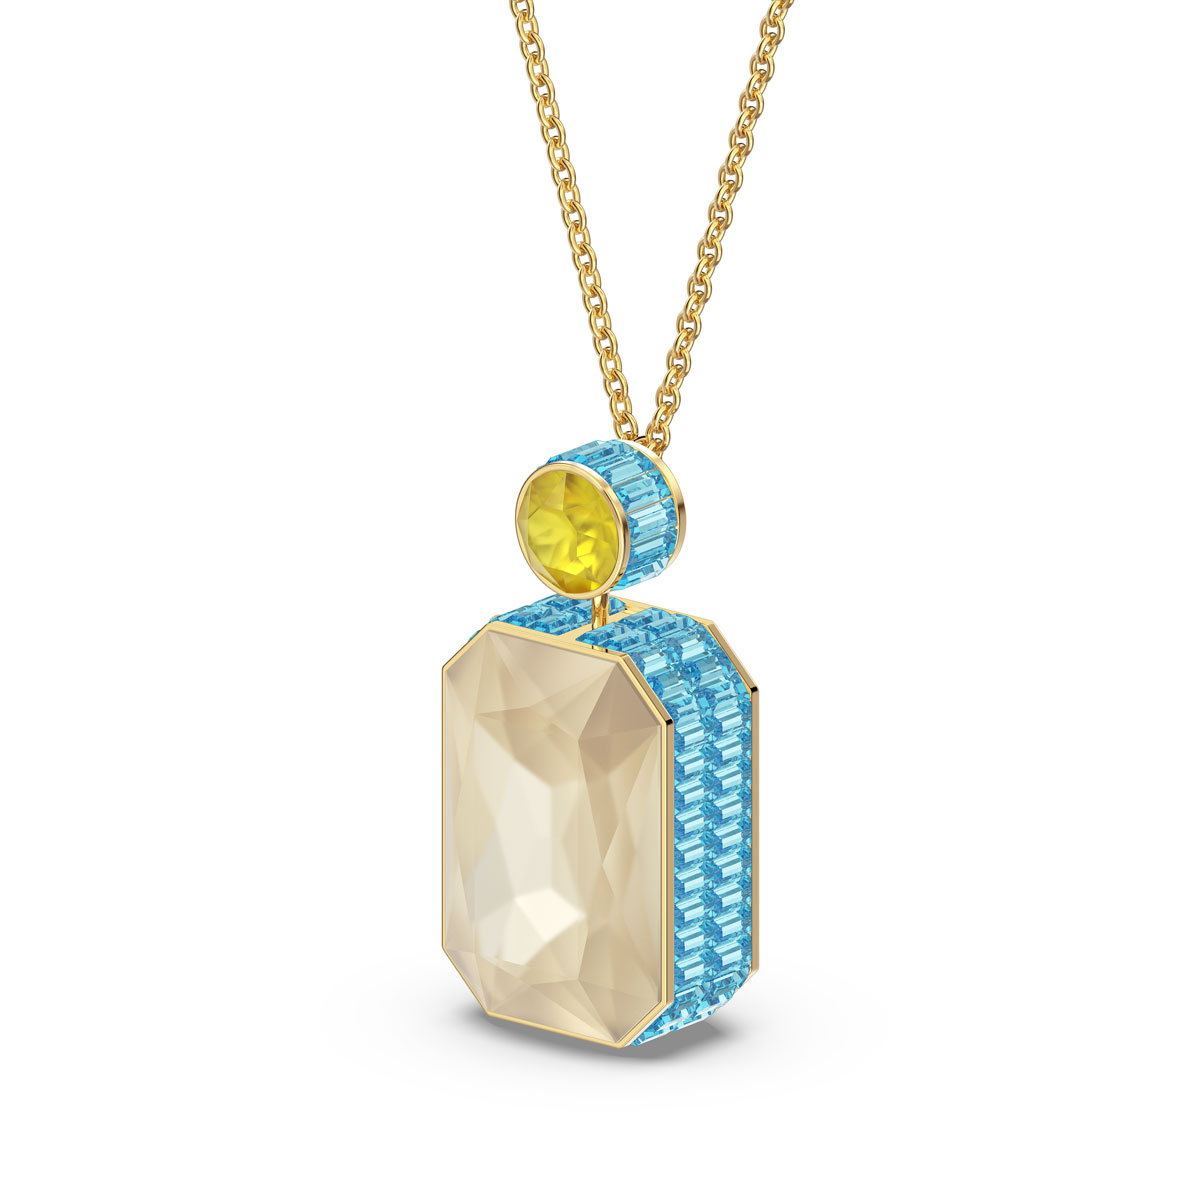 Swarovski Orbita Necklace, Octagon Cut Crystal, Multicolored, Gold-Tone